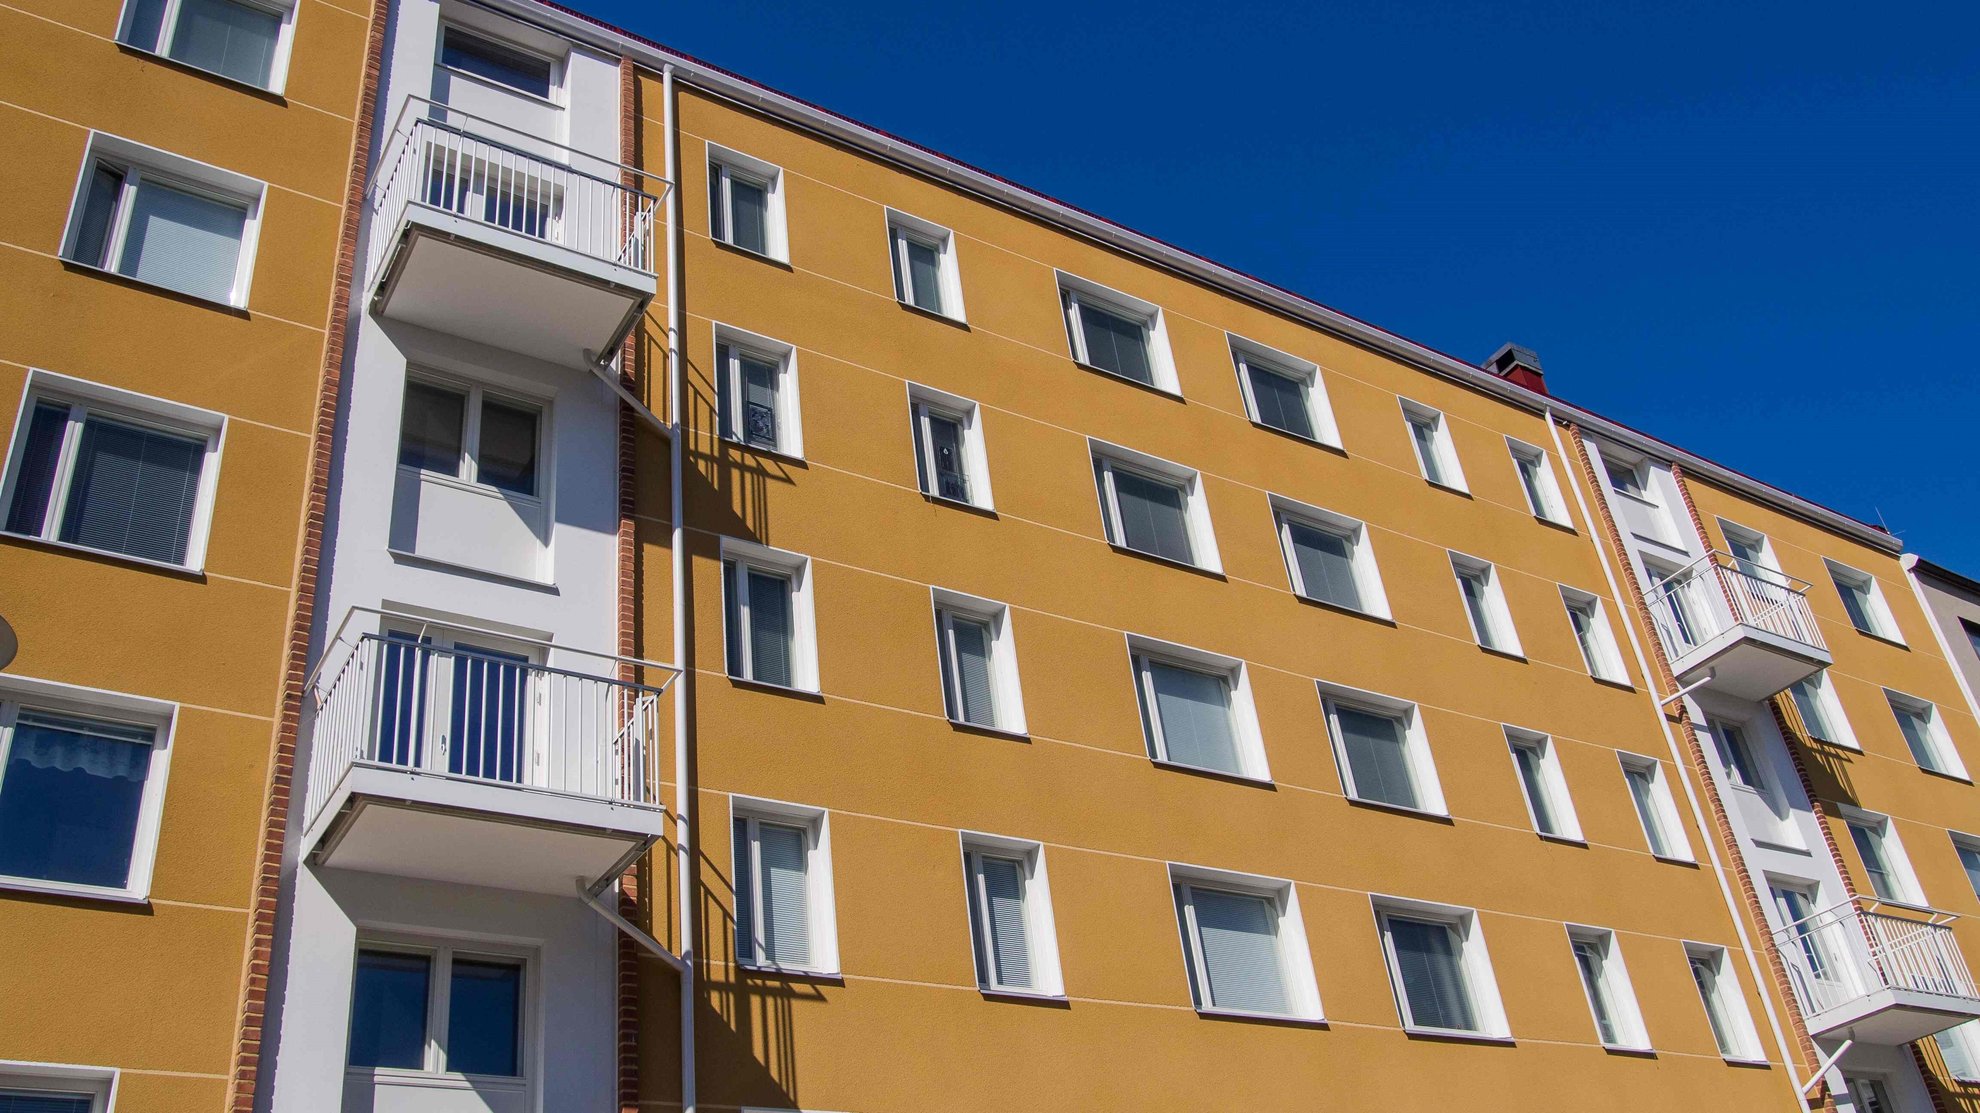 Housing company As. Oy Näsinhovi, Tampere